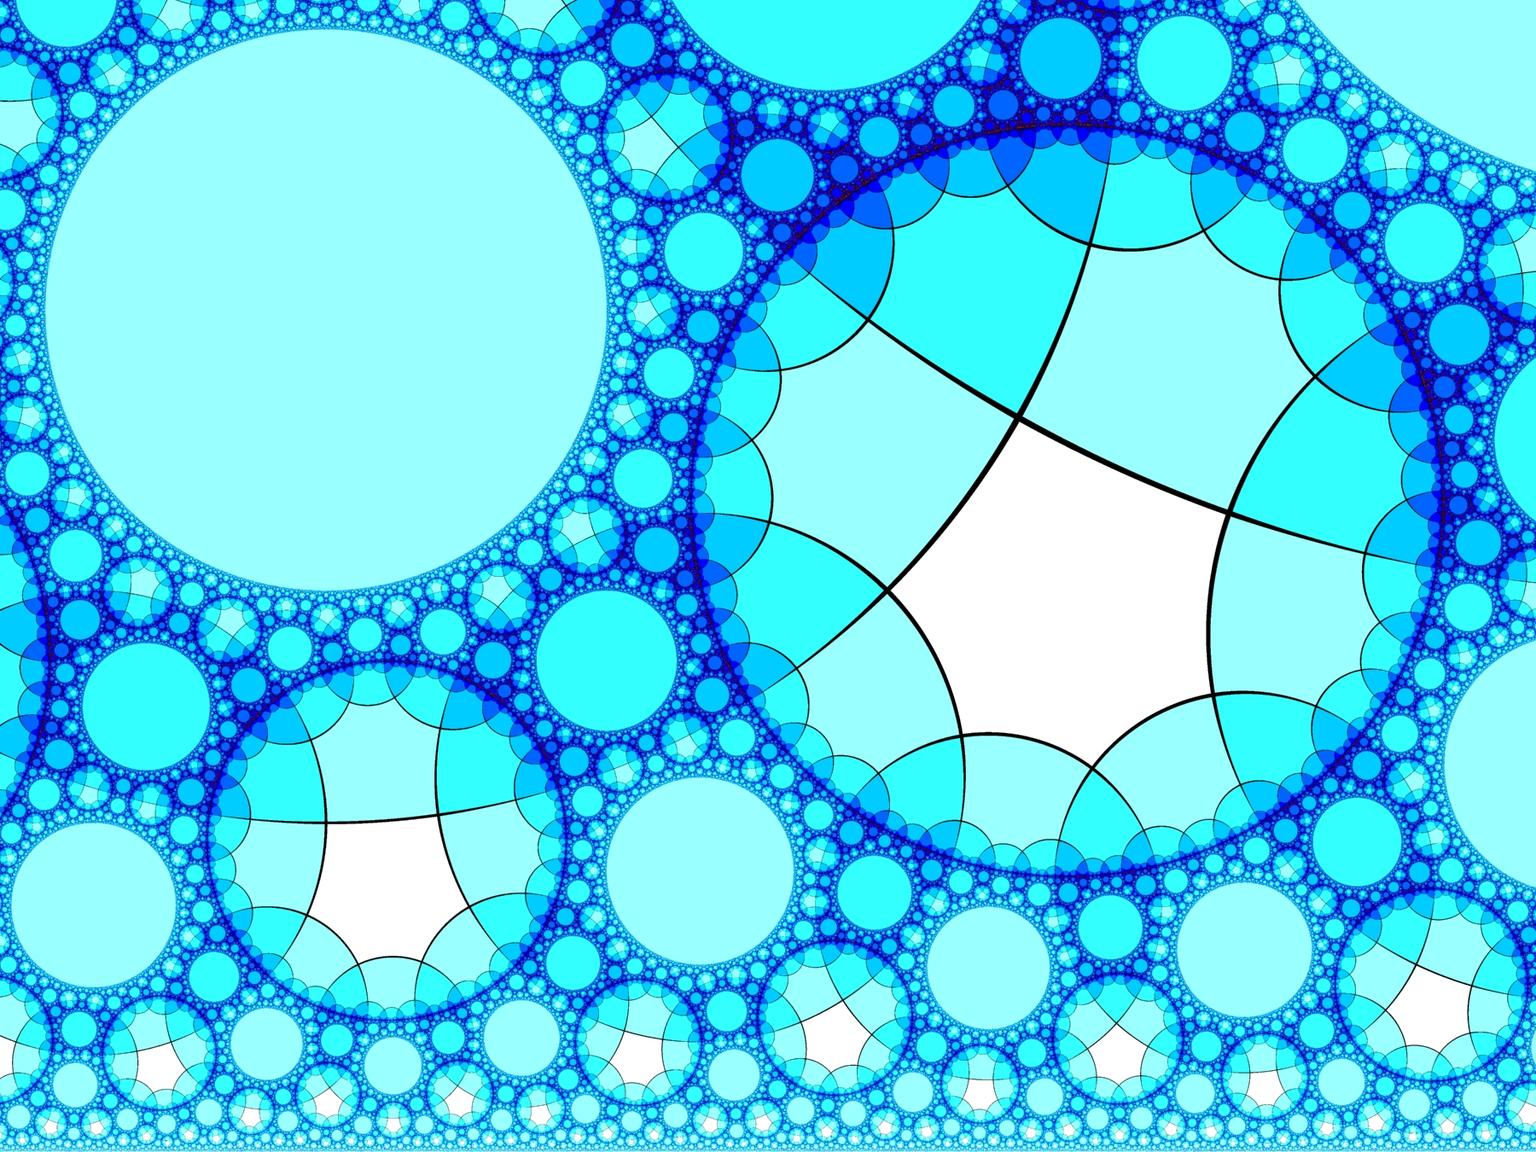 Image for entry 'Regular {4,6,4} H³ Honeycomb'